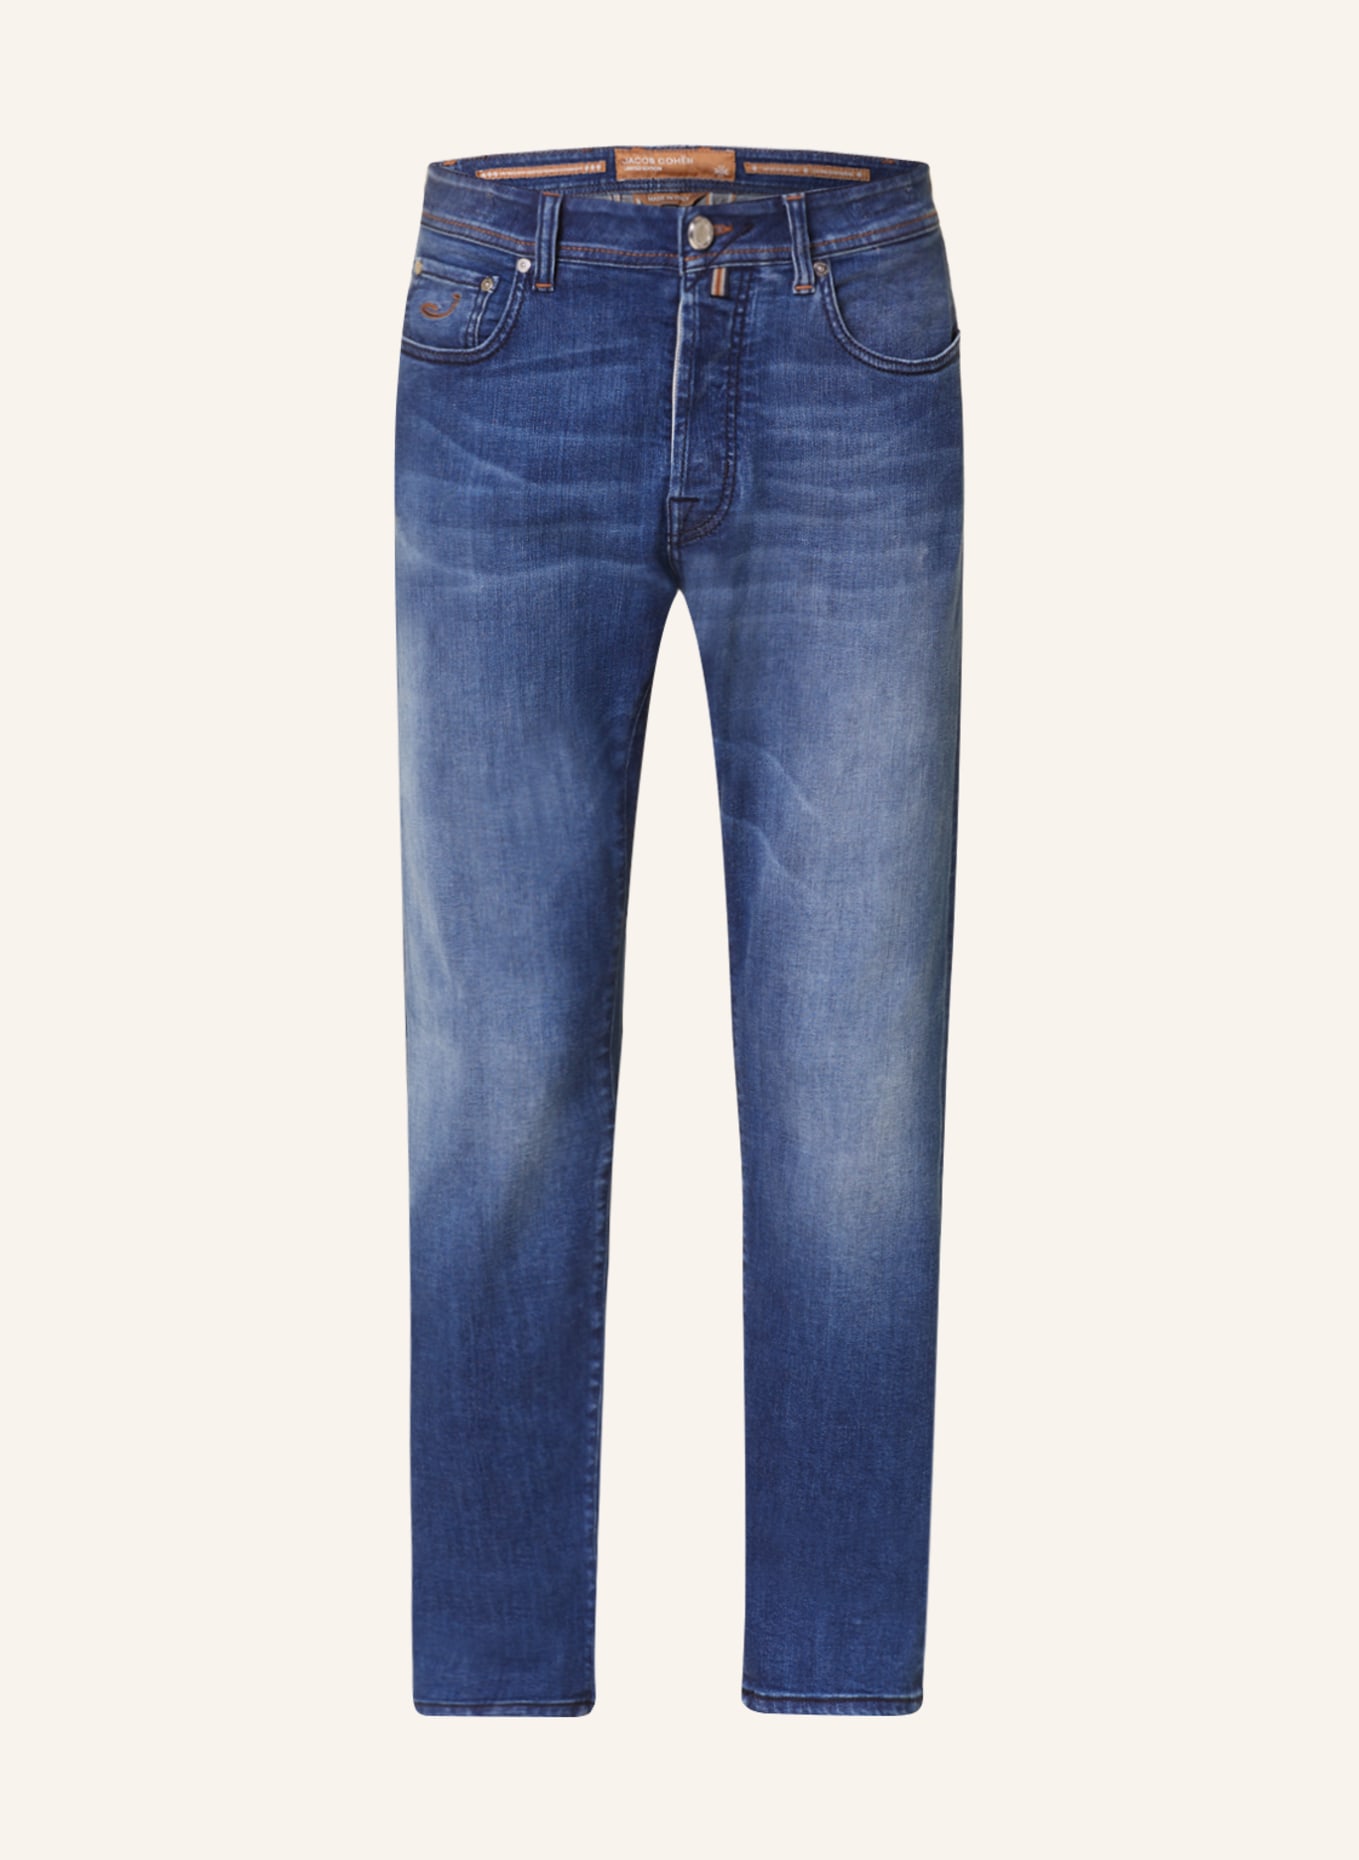 JACOB COHEN Jeans BARD LIMITED Regular Fit, Farbe: 553D Mid Blue (Bild 1)